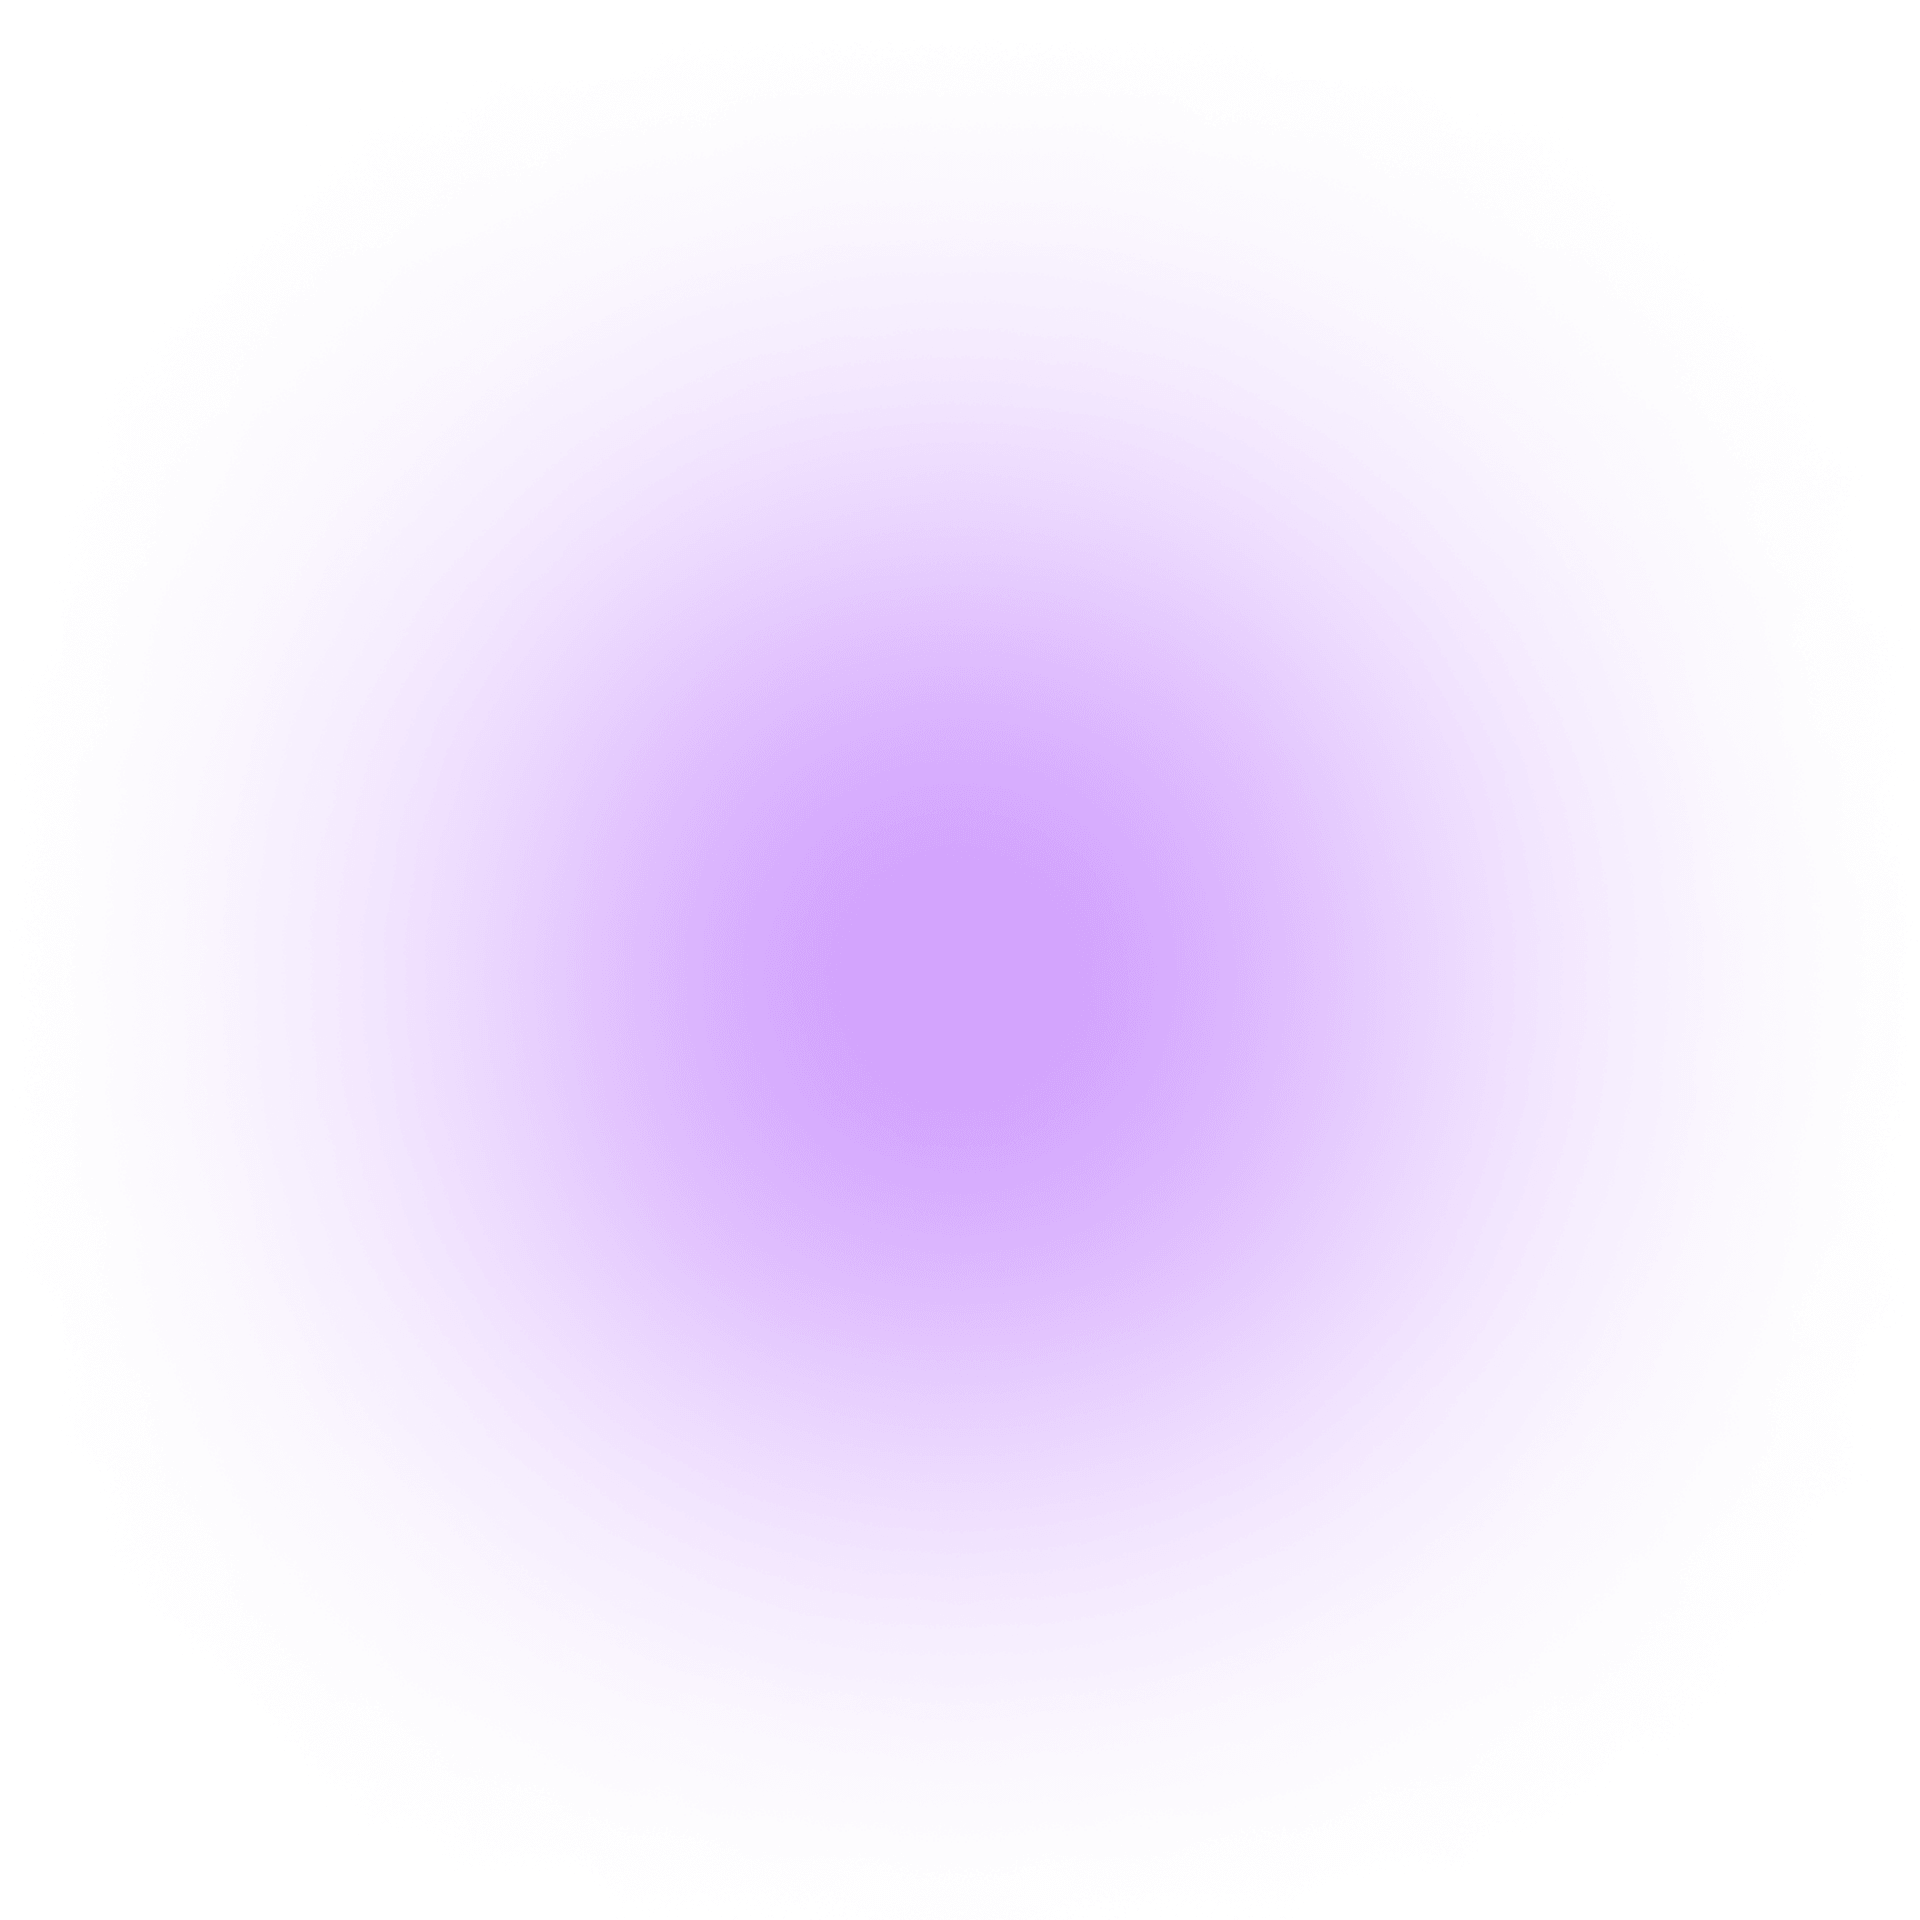 Blur BG purple